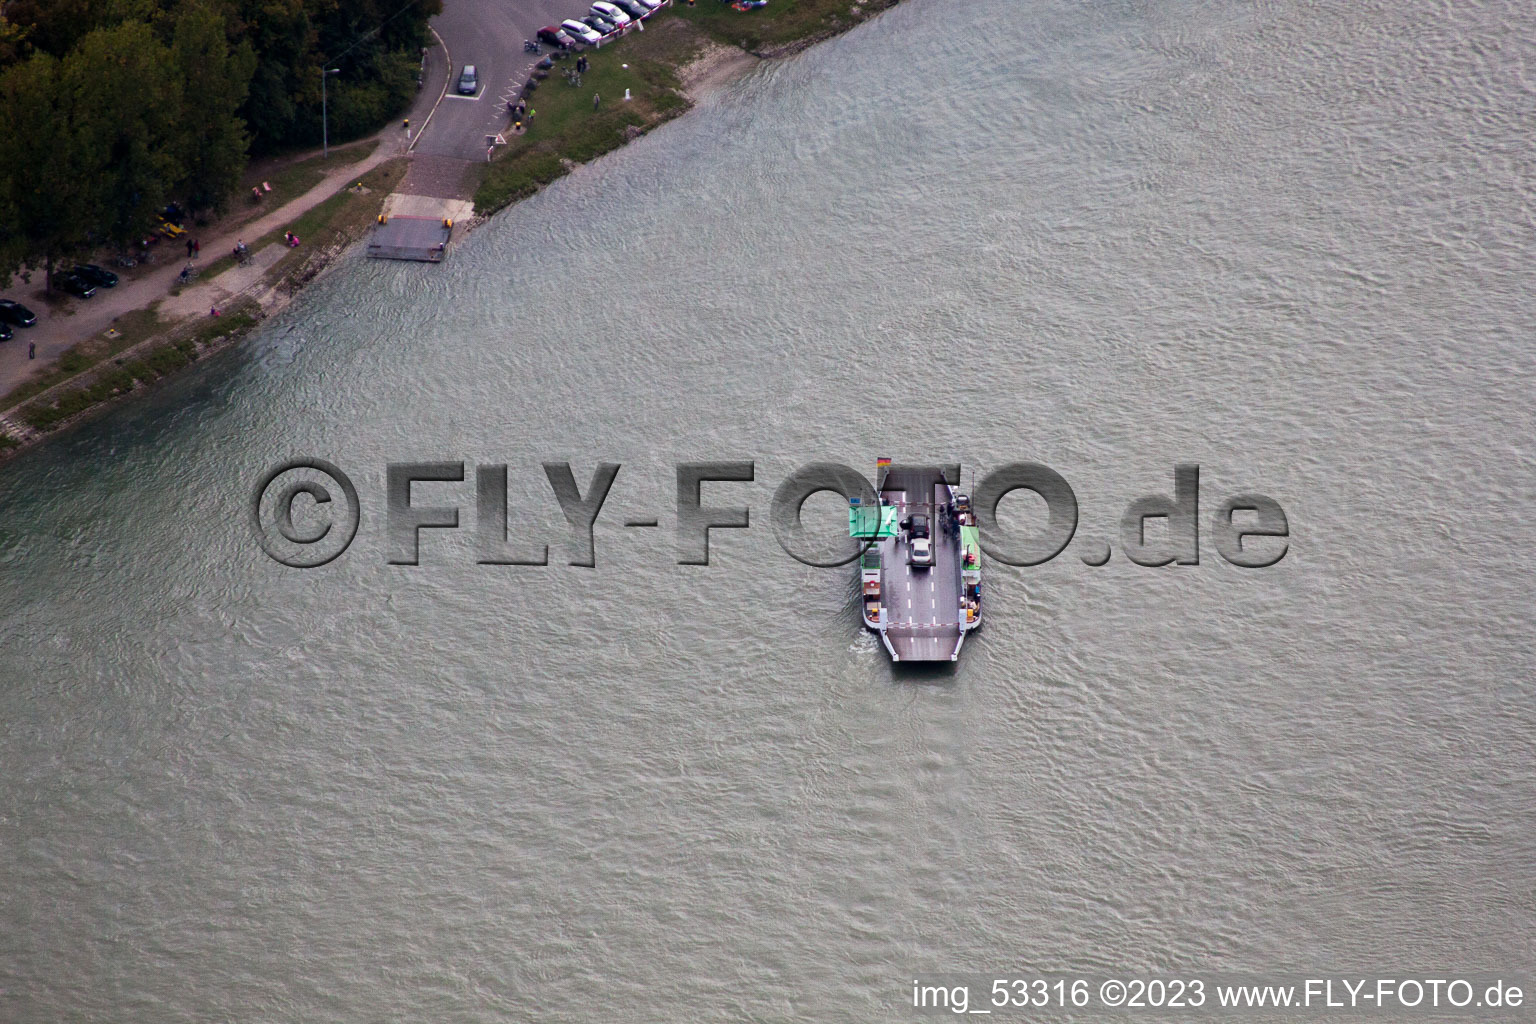 Rhine ferry Neuburgweier in Neuburg in the state Rhineland-Palatinate, Germany